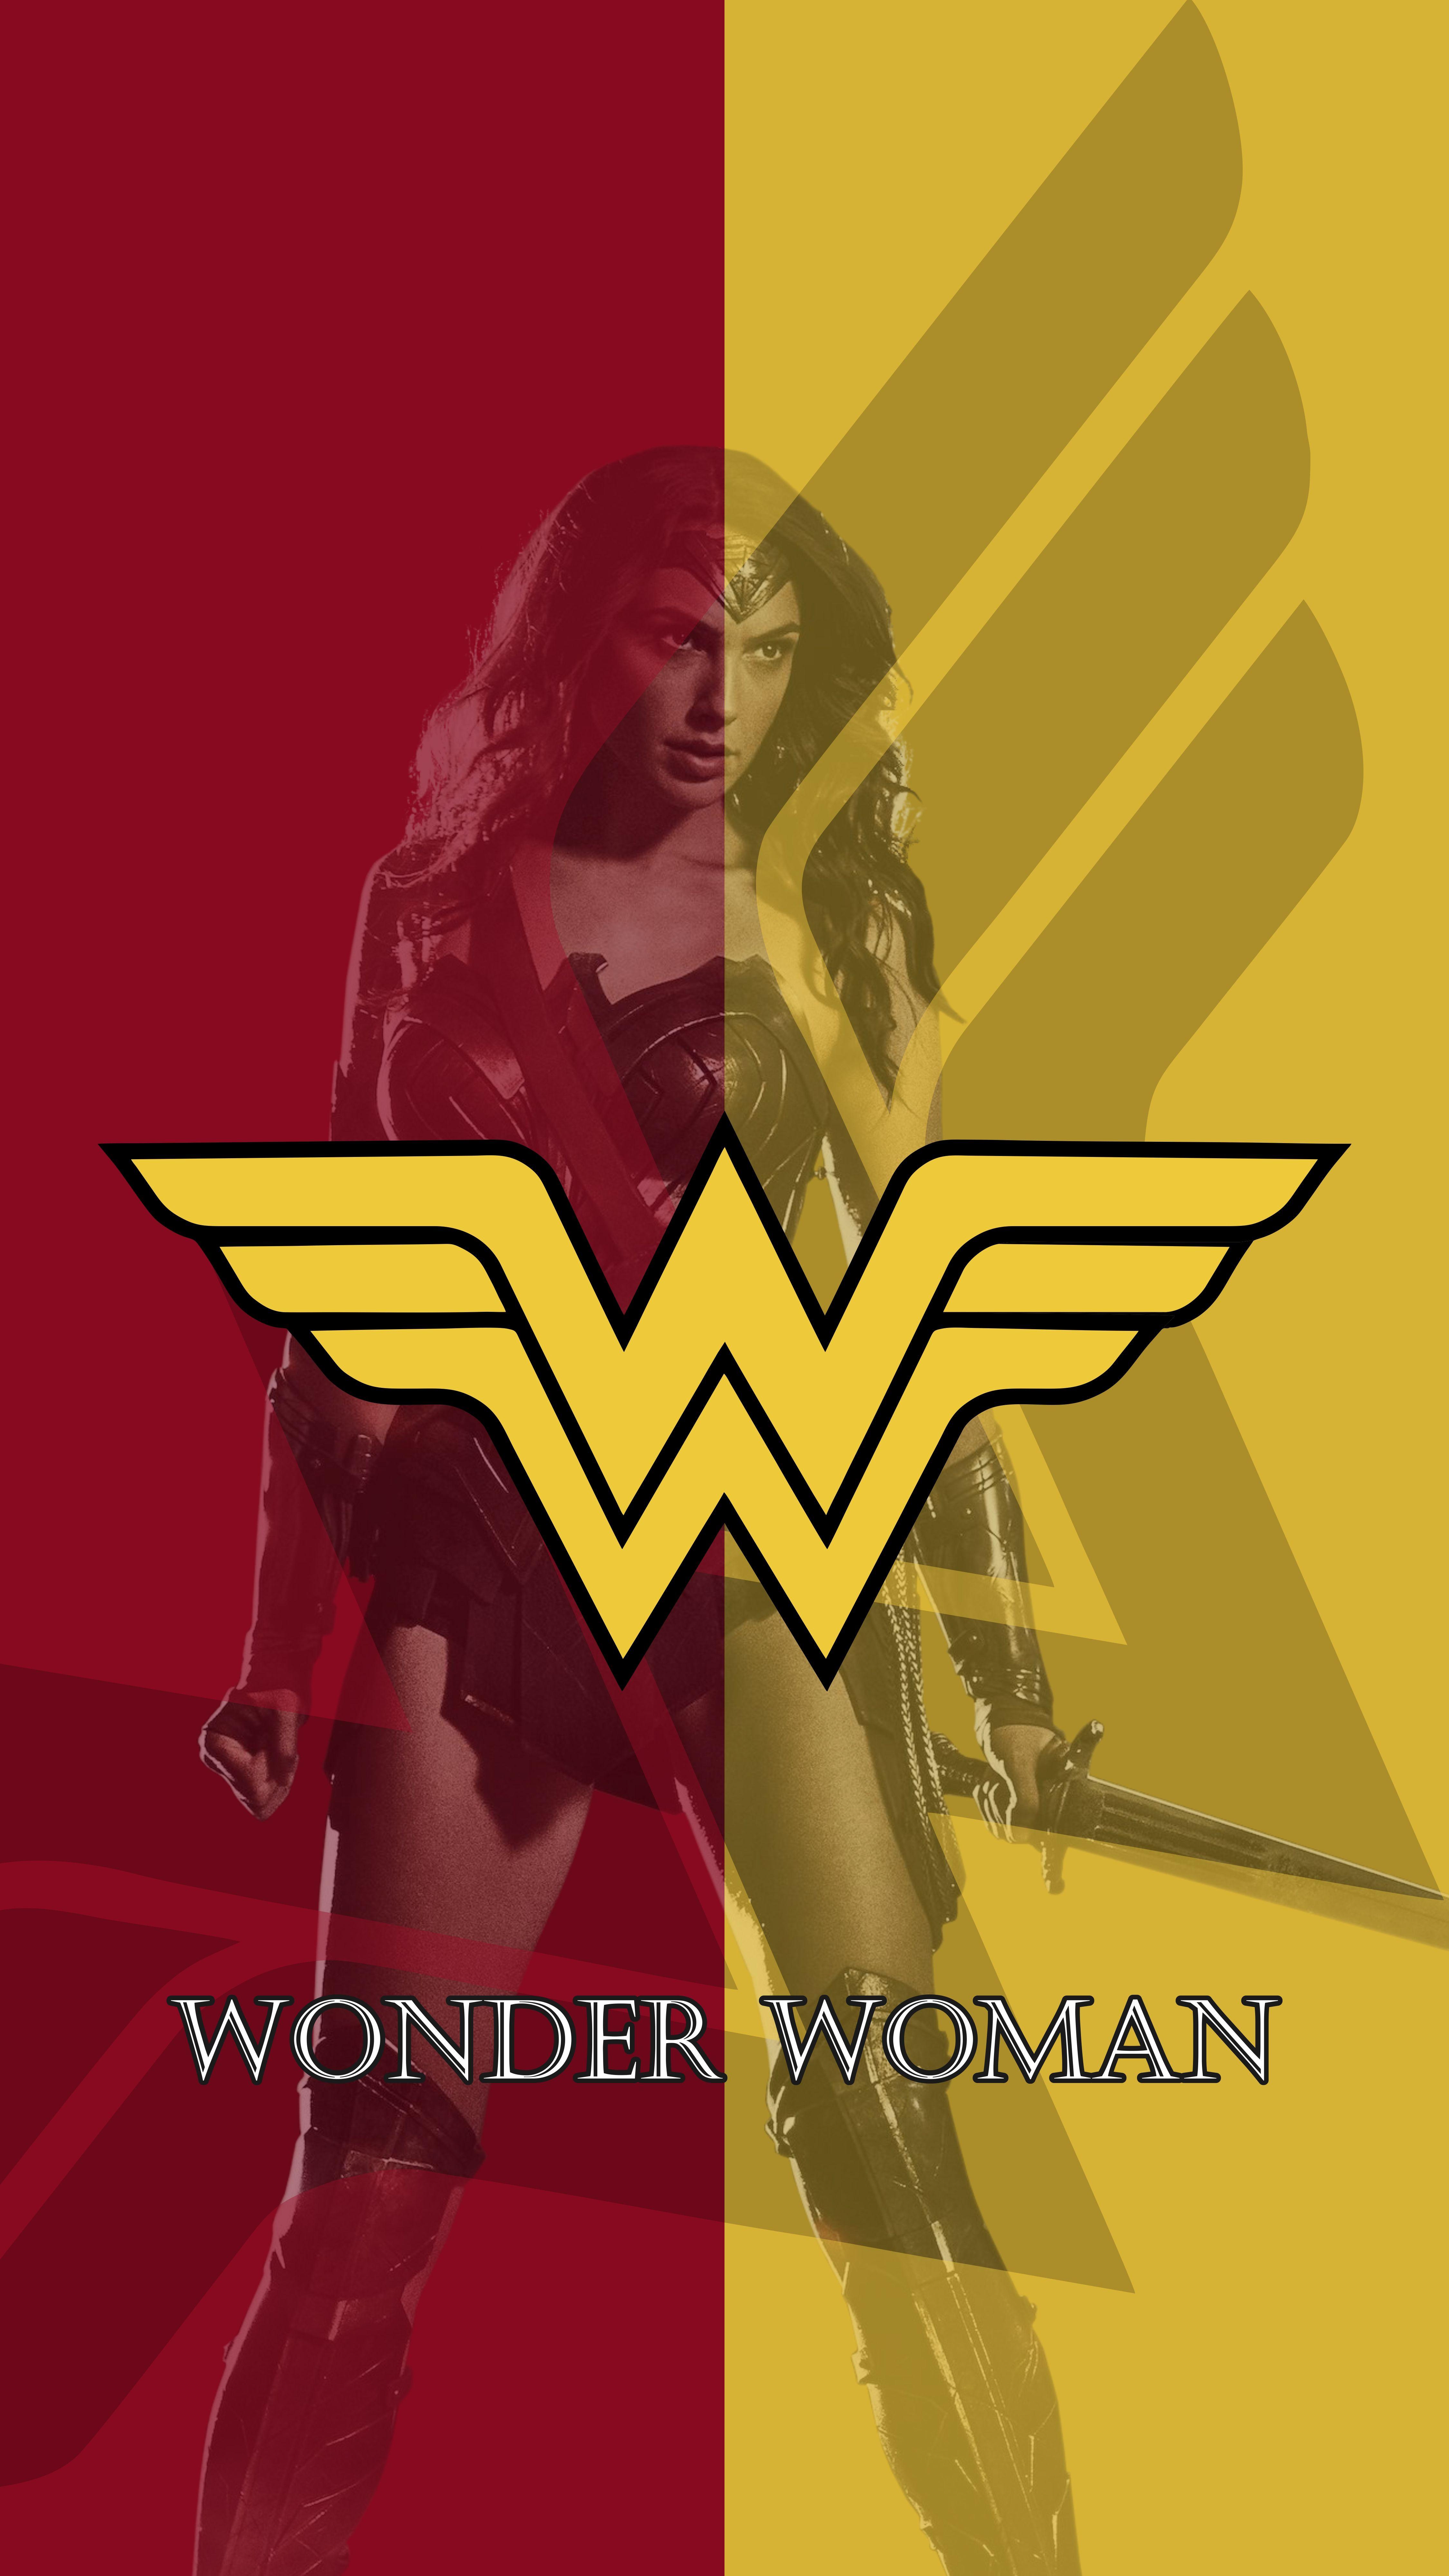 Android IPhone HD Wallpaper: WONDER WOMAN #DC #DCEU #DCComics #WonderWoman #DianaPrince. Fundo Mulher Maravilha, Mulher Maravilha Filme, Wonder Woman